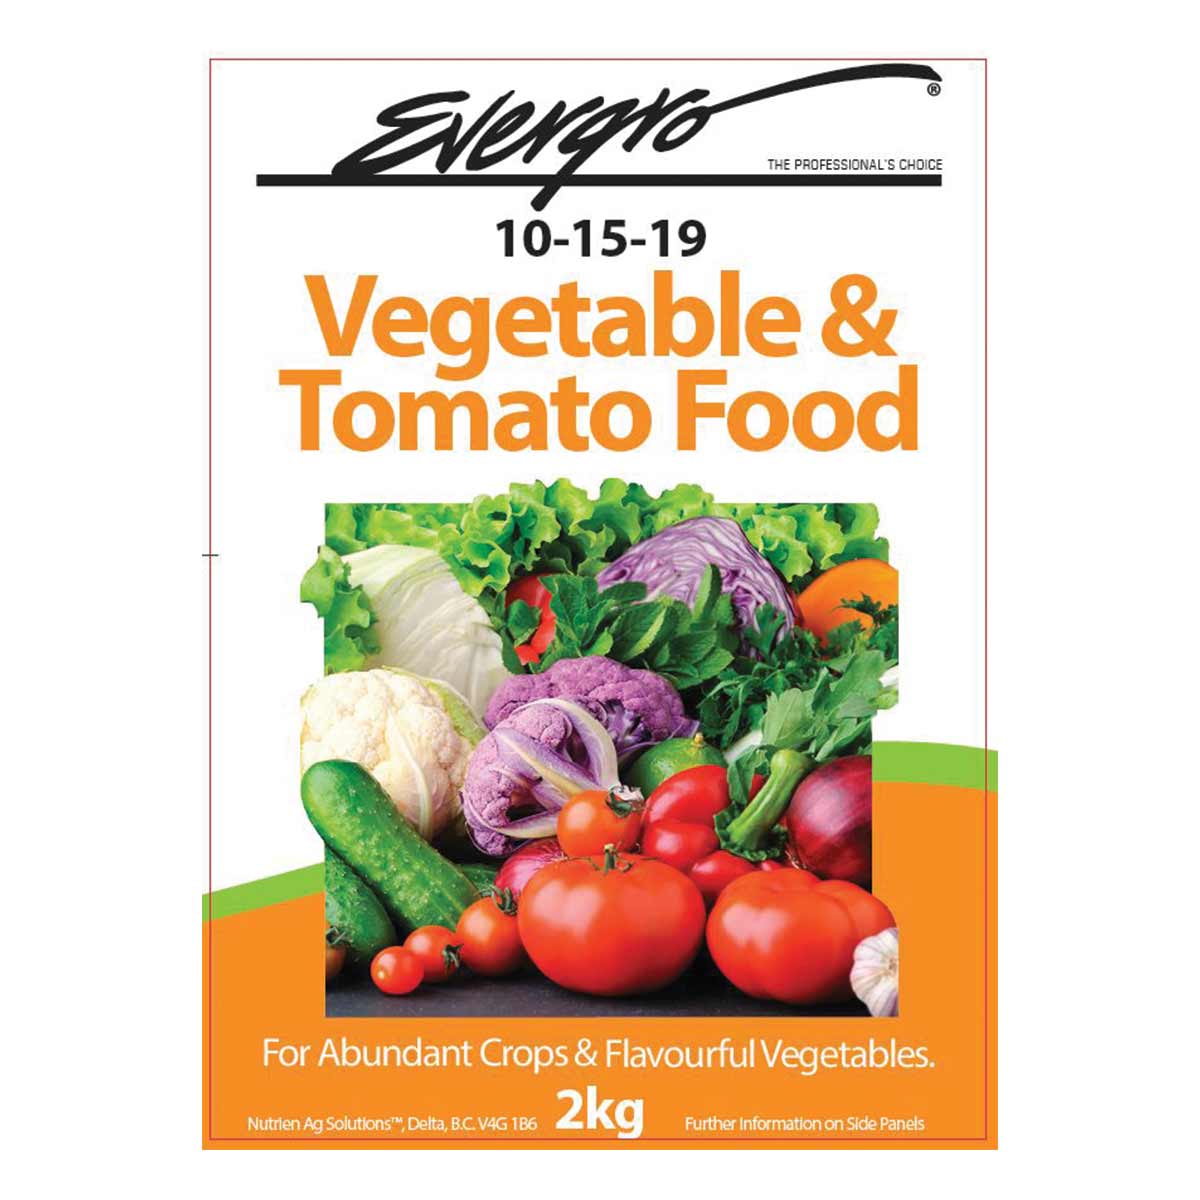 Evergo Tomato/Vegetable Fertilizer 10-15-19 - 2kg